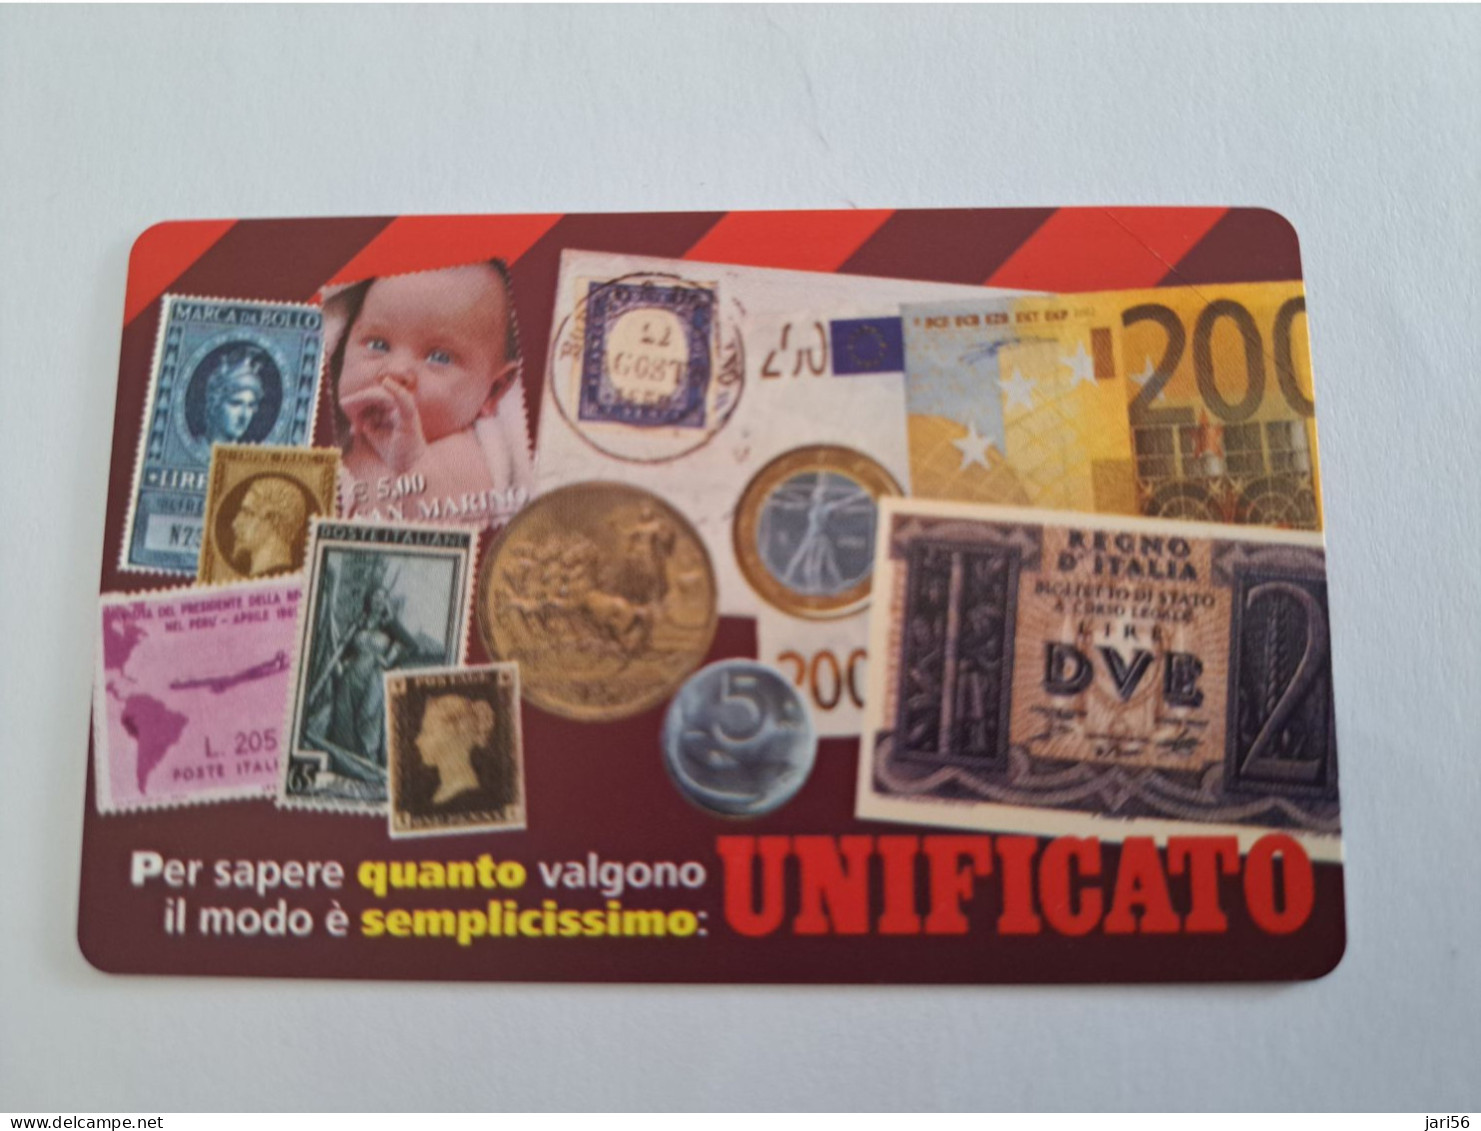 ITALIA EURO 3,00 /   /MONEY ON CARD / COIN / BILJETS /STAMPS ON CARD/   MINT  ** 13915 ** - Openbaar Gewoon